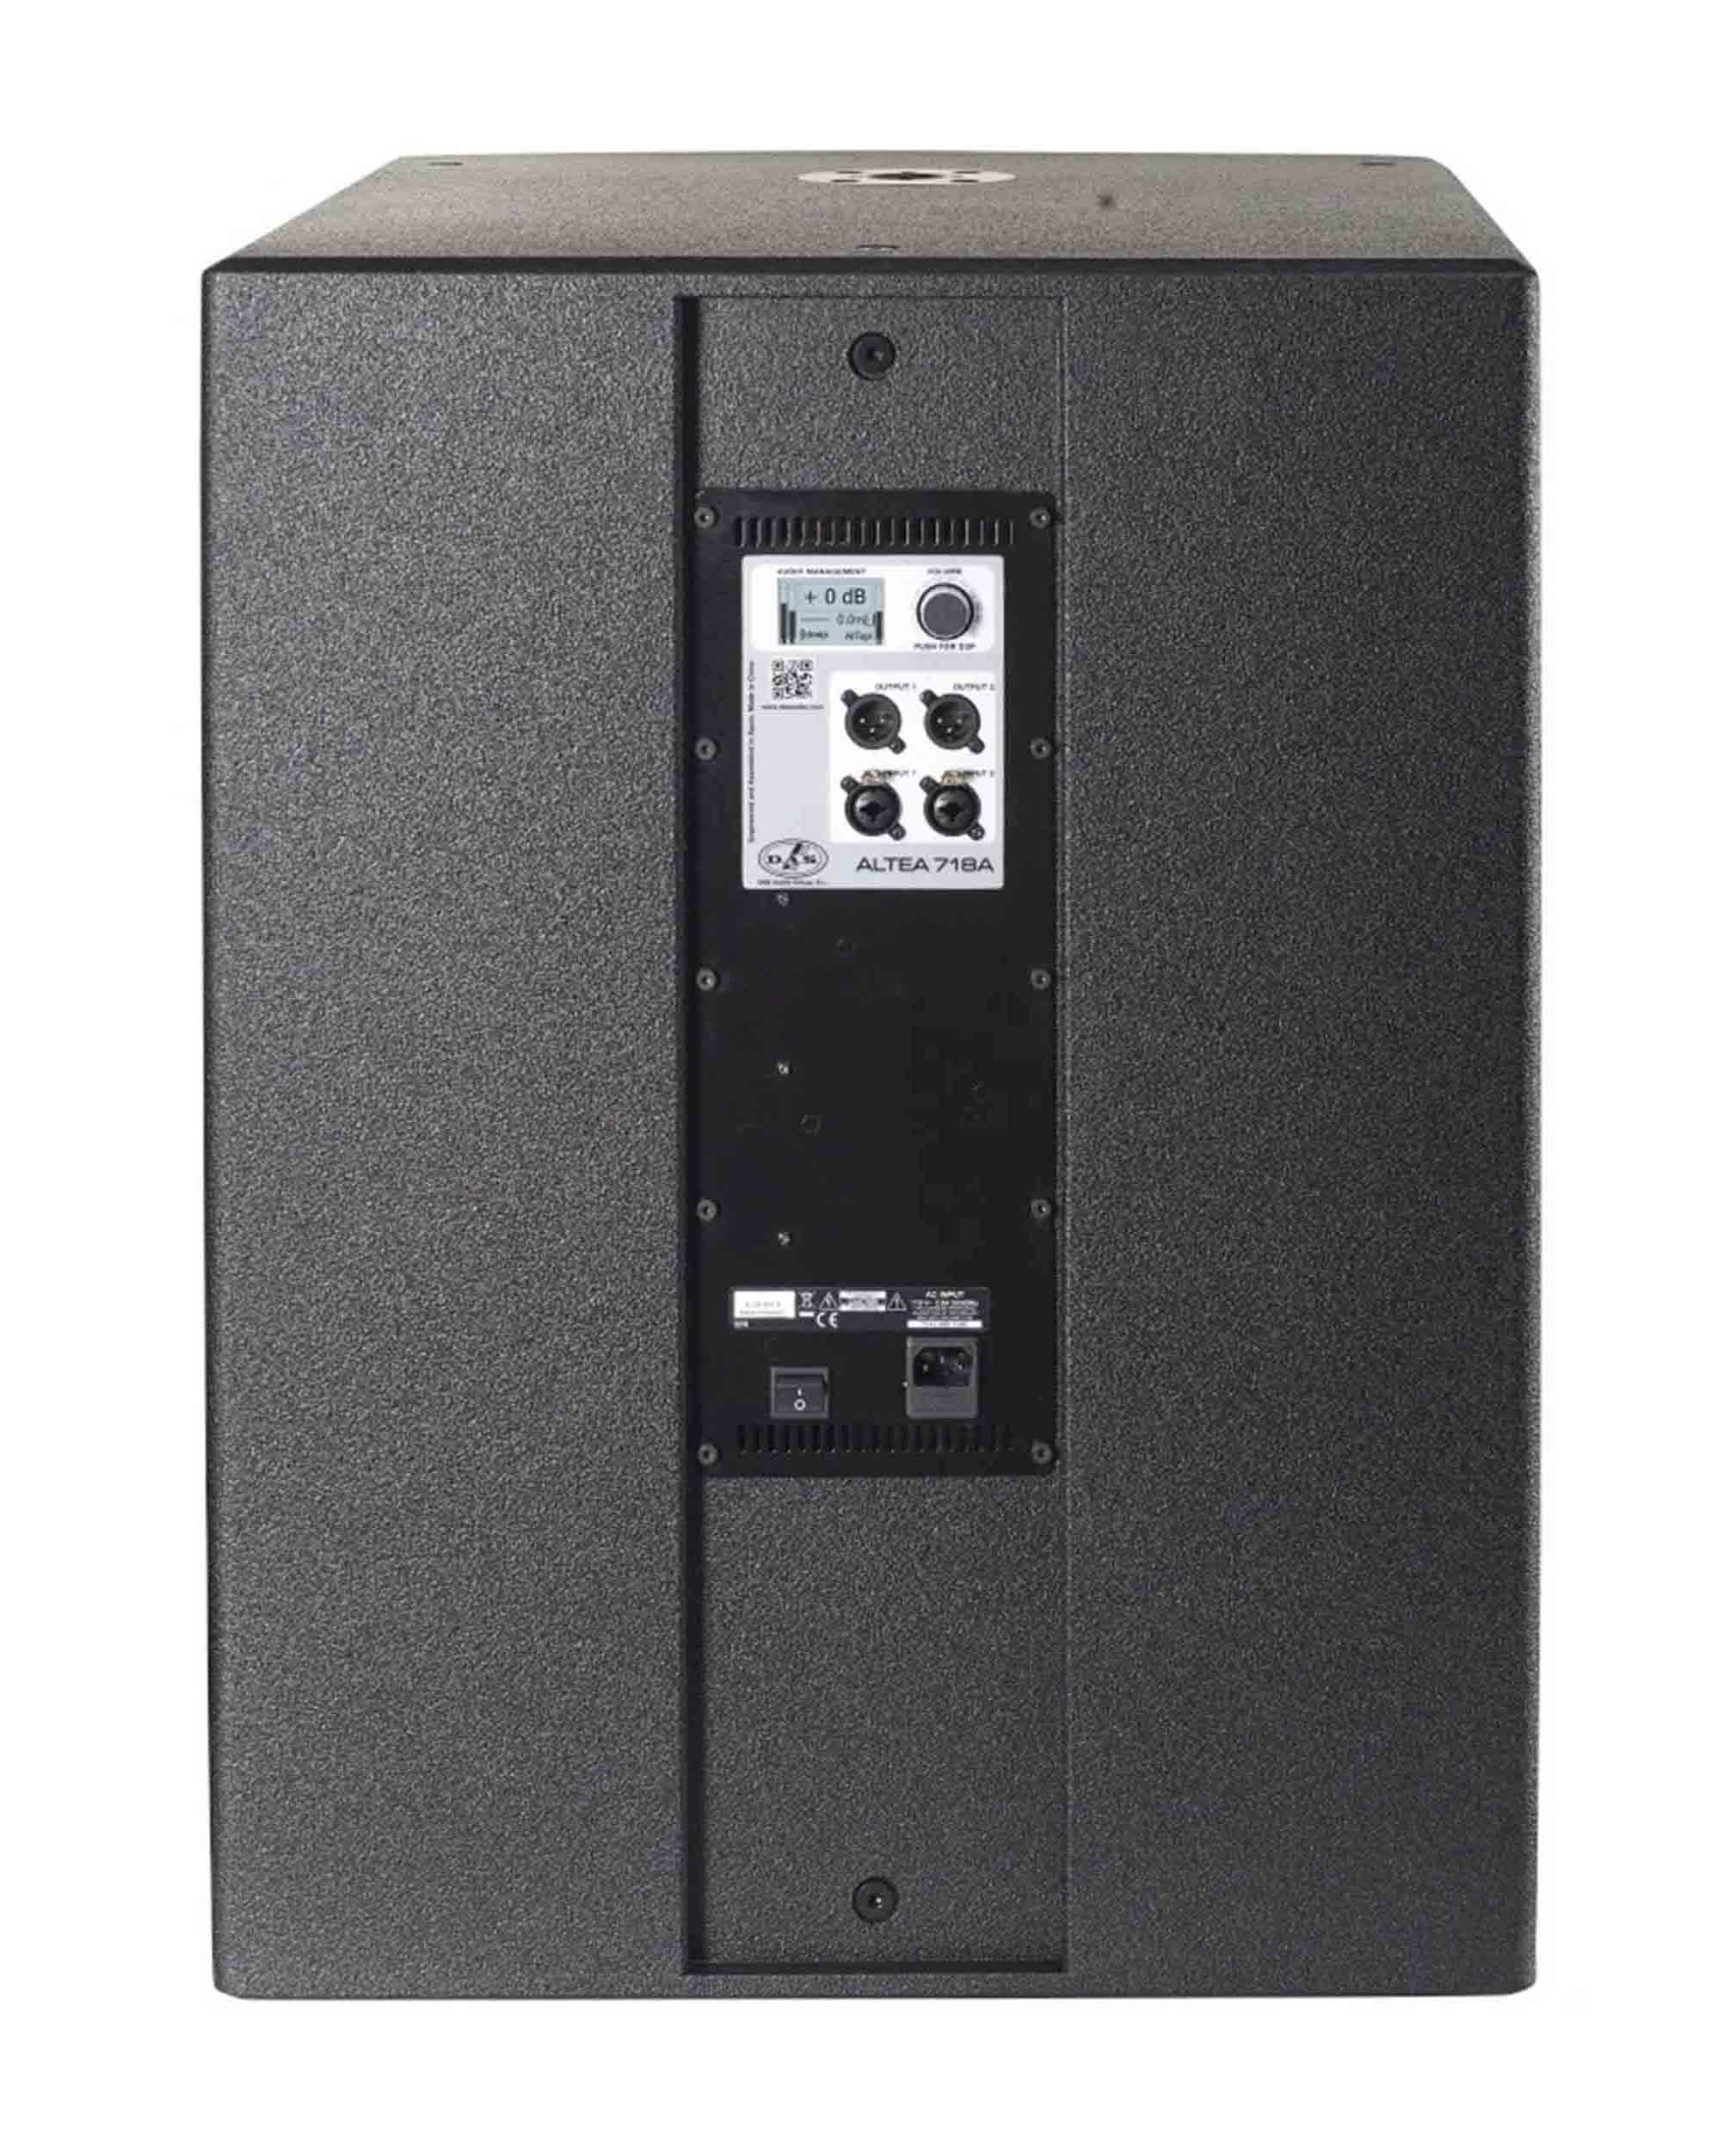 DAS Audio 712ACVRALTEA12718A, 12-Inch Powered Speaker DJ Package with Subwoofer by DAS Audio